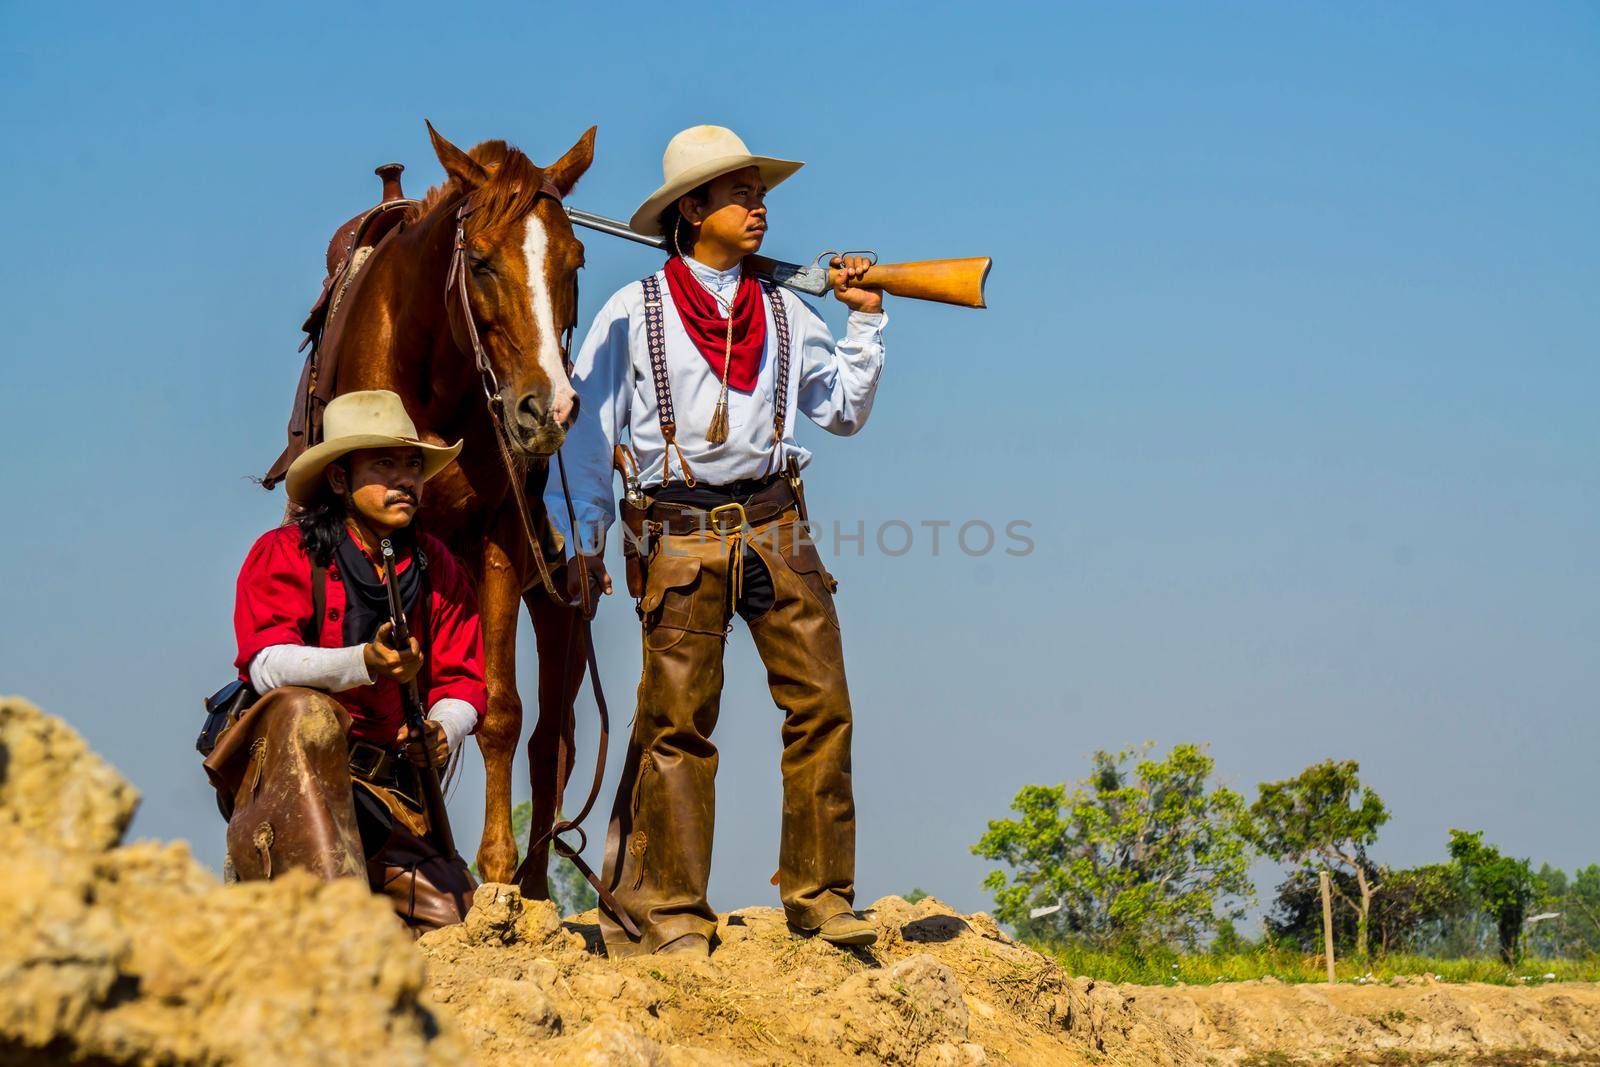 Cowboy Life: Cowboy Caravan with lover horses by chuanchai